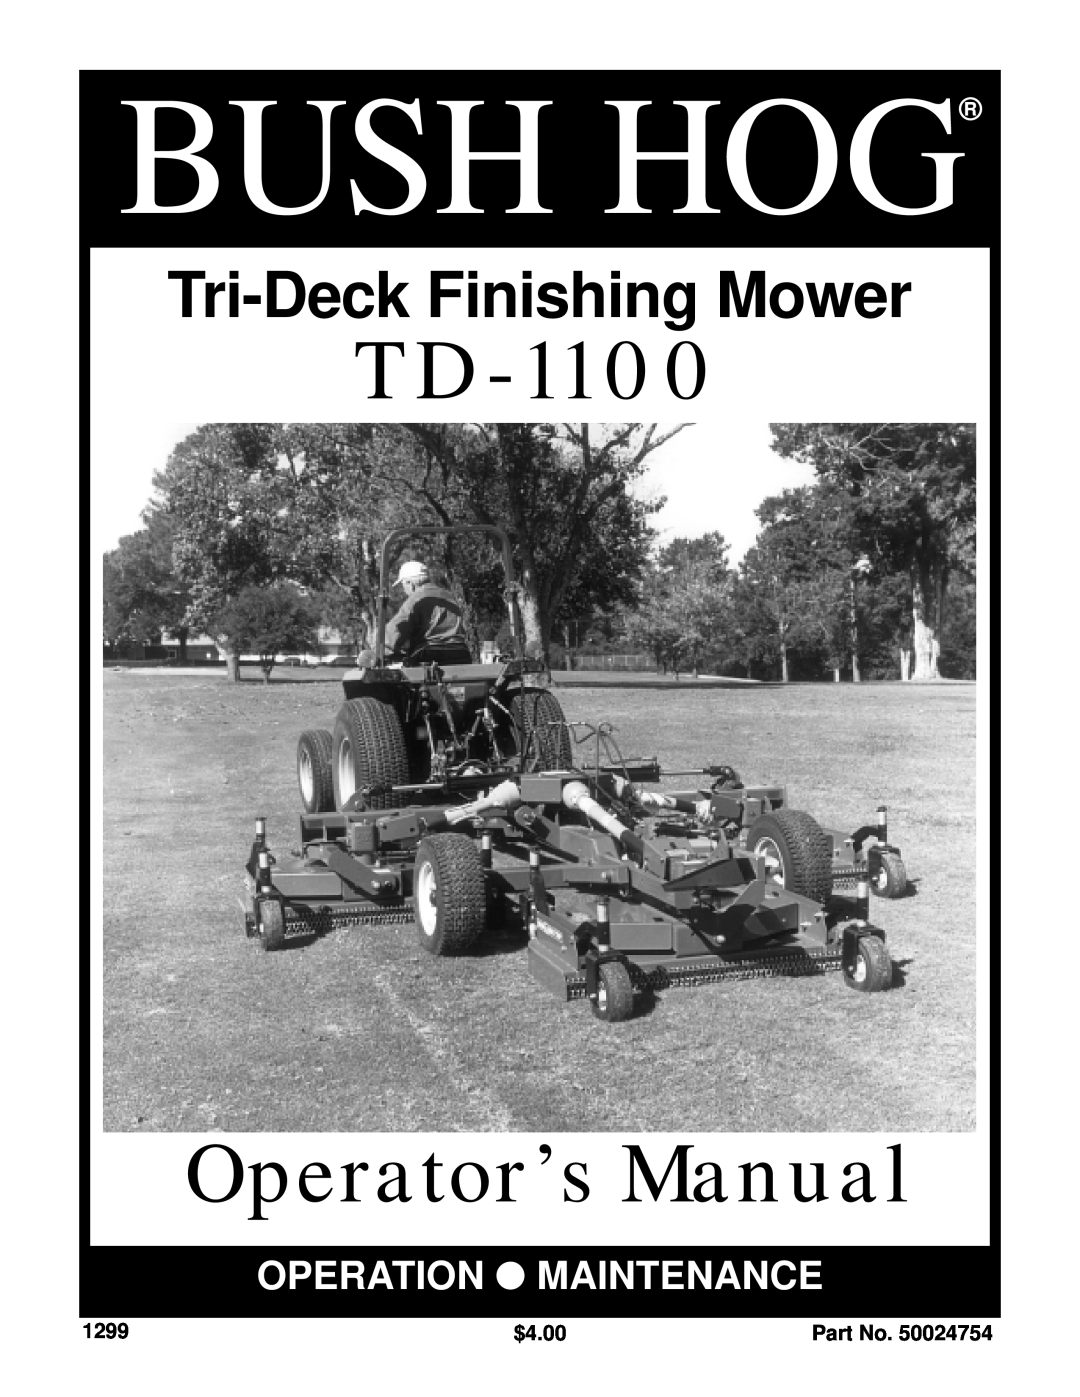 Bush Hog TD-1100 manual 1299, $4.00, Bush Hog, TD Operator’s Manual, Tri-DeckFinishing Mower, Operation Maintenance 